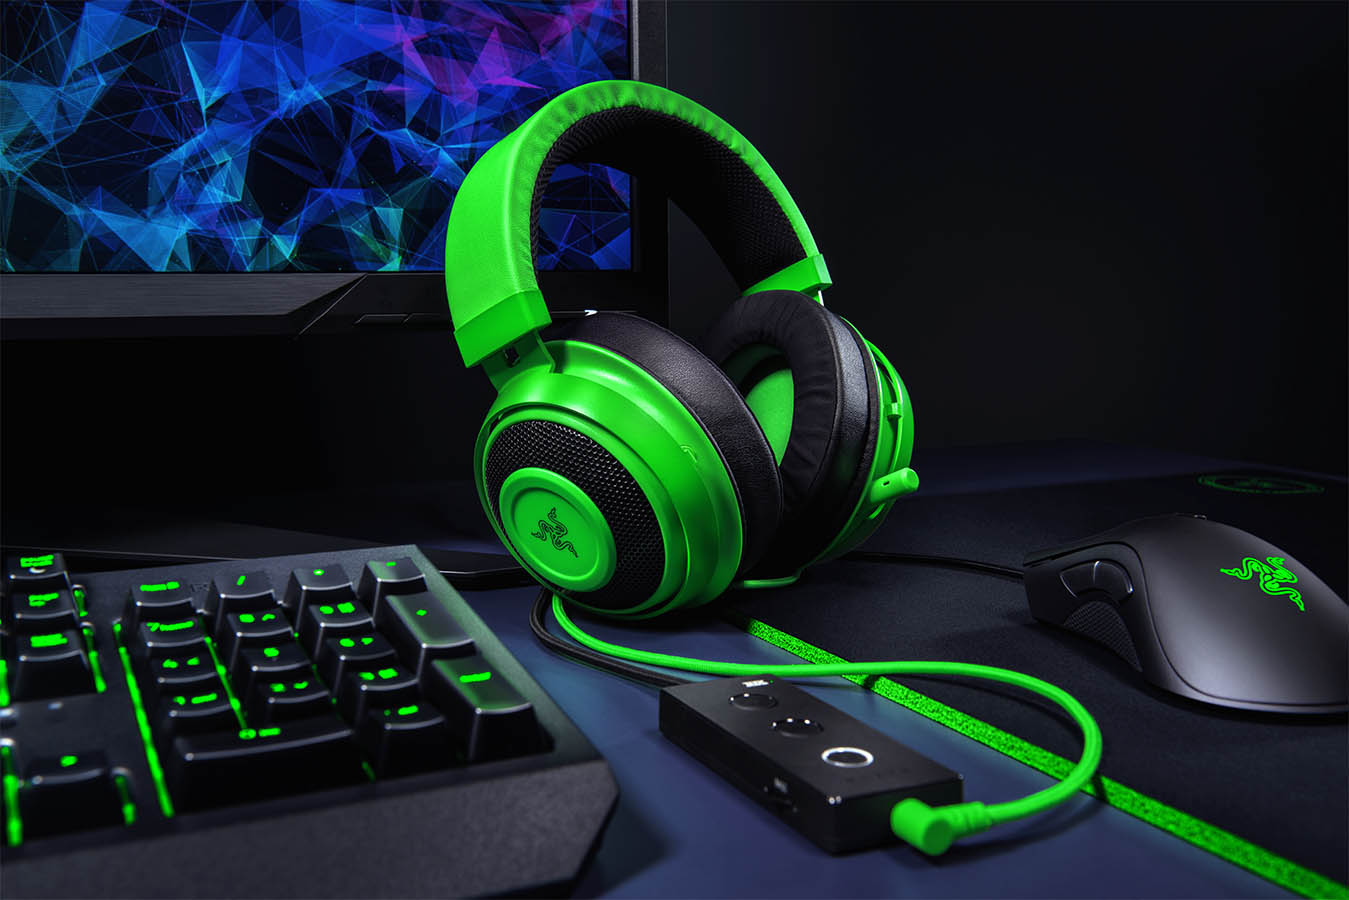 Razer pesenta los nuevos Kraken Tournament Edition, BlackWidow Elite y Mamba Wireless